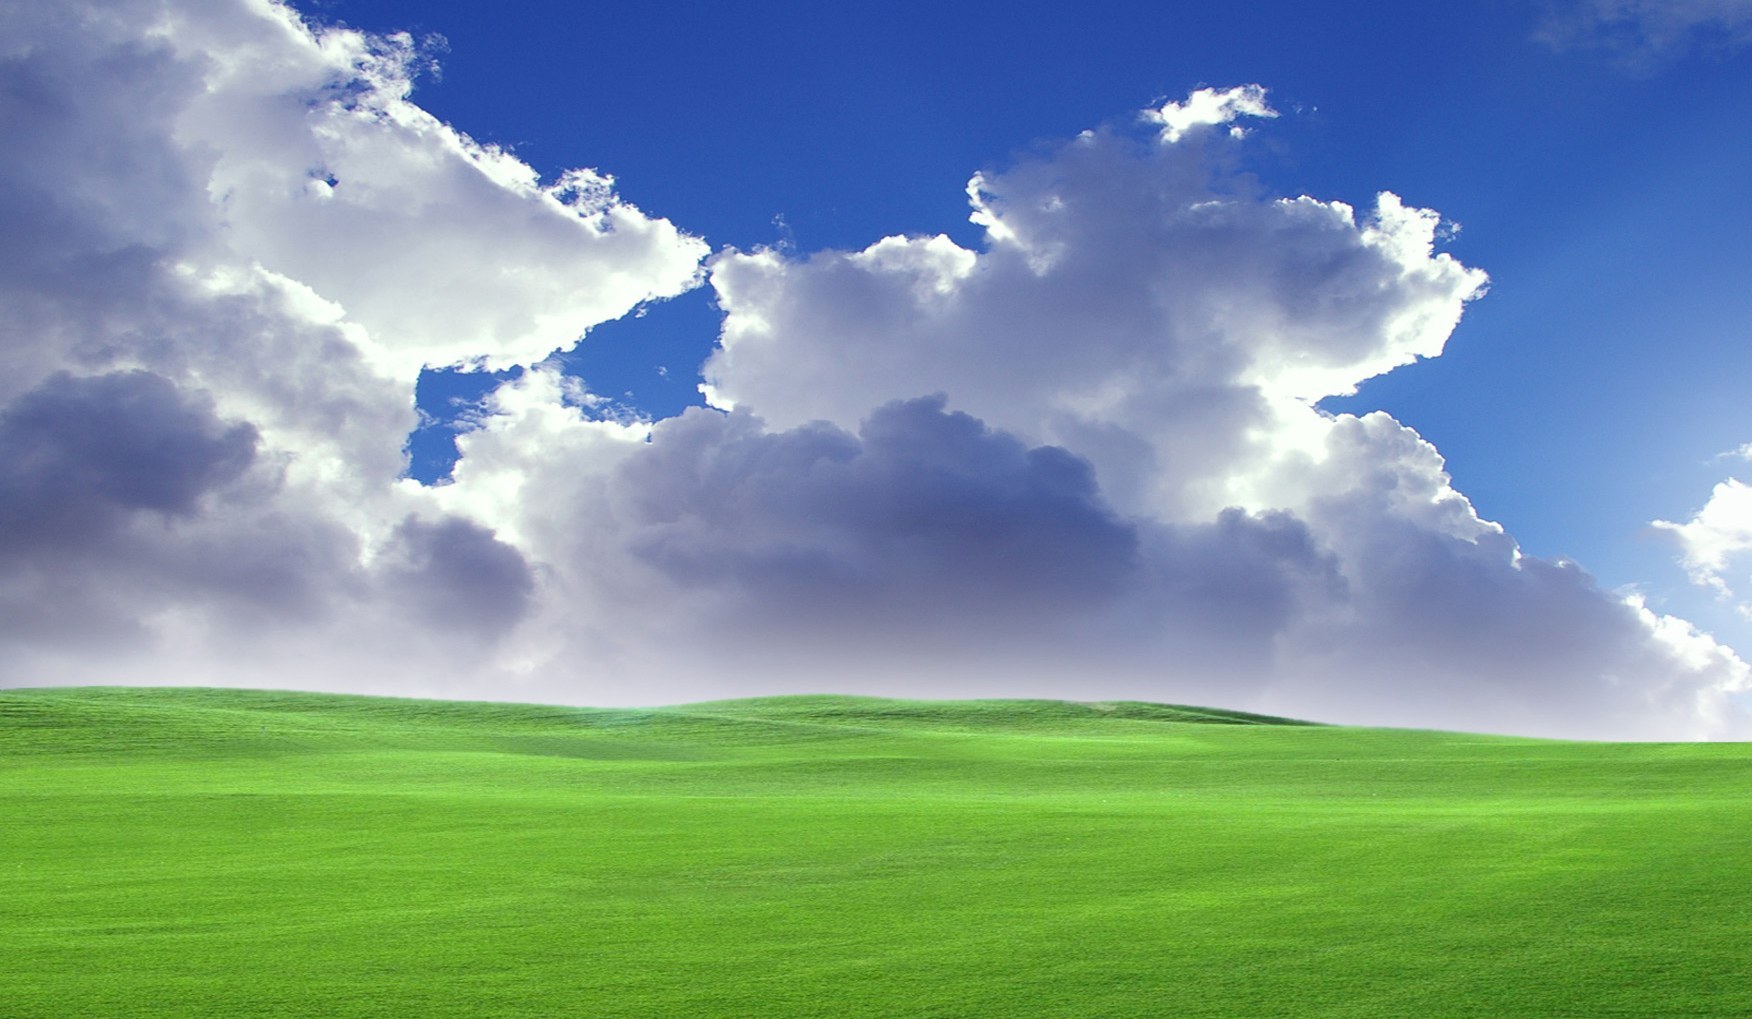 hd wallpapers 1080p widescreen,sky,grassland,natural landscape,daytime,nature